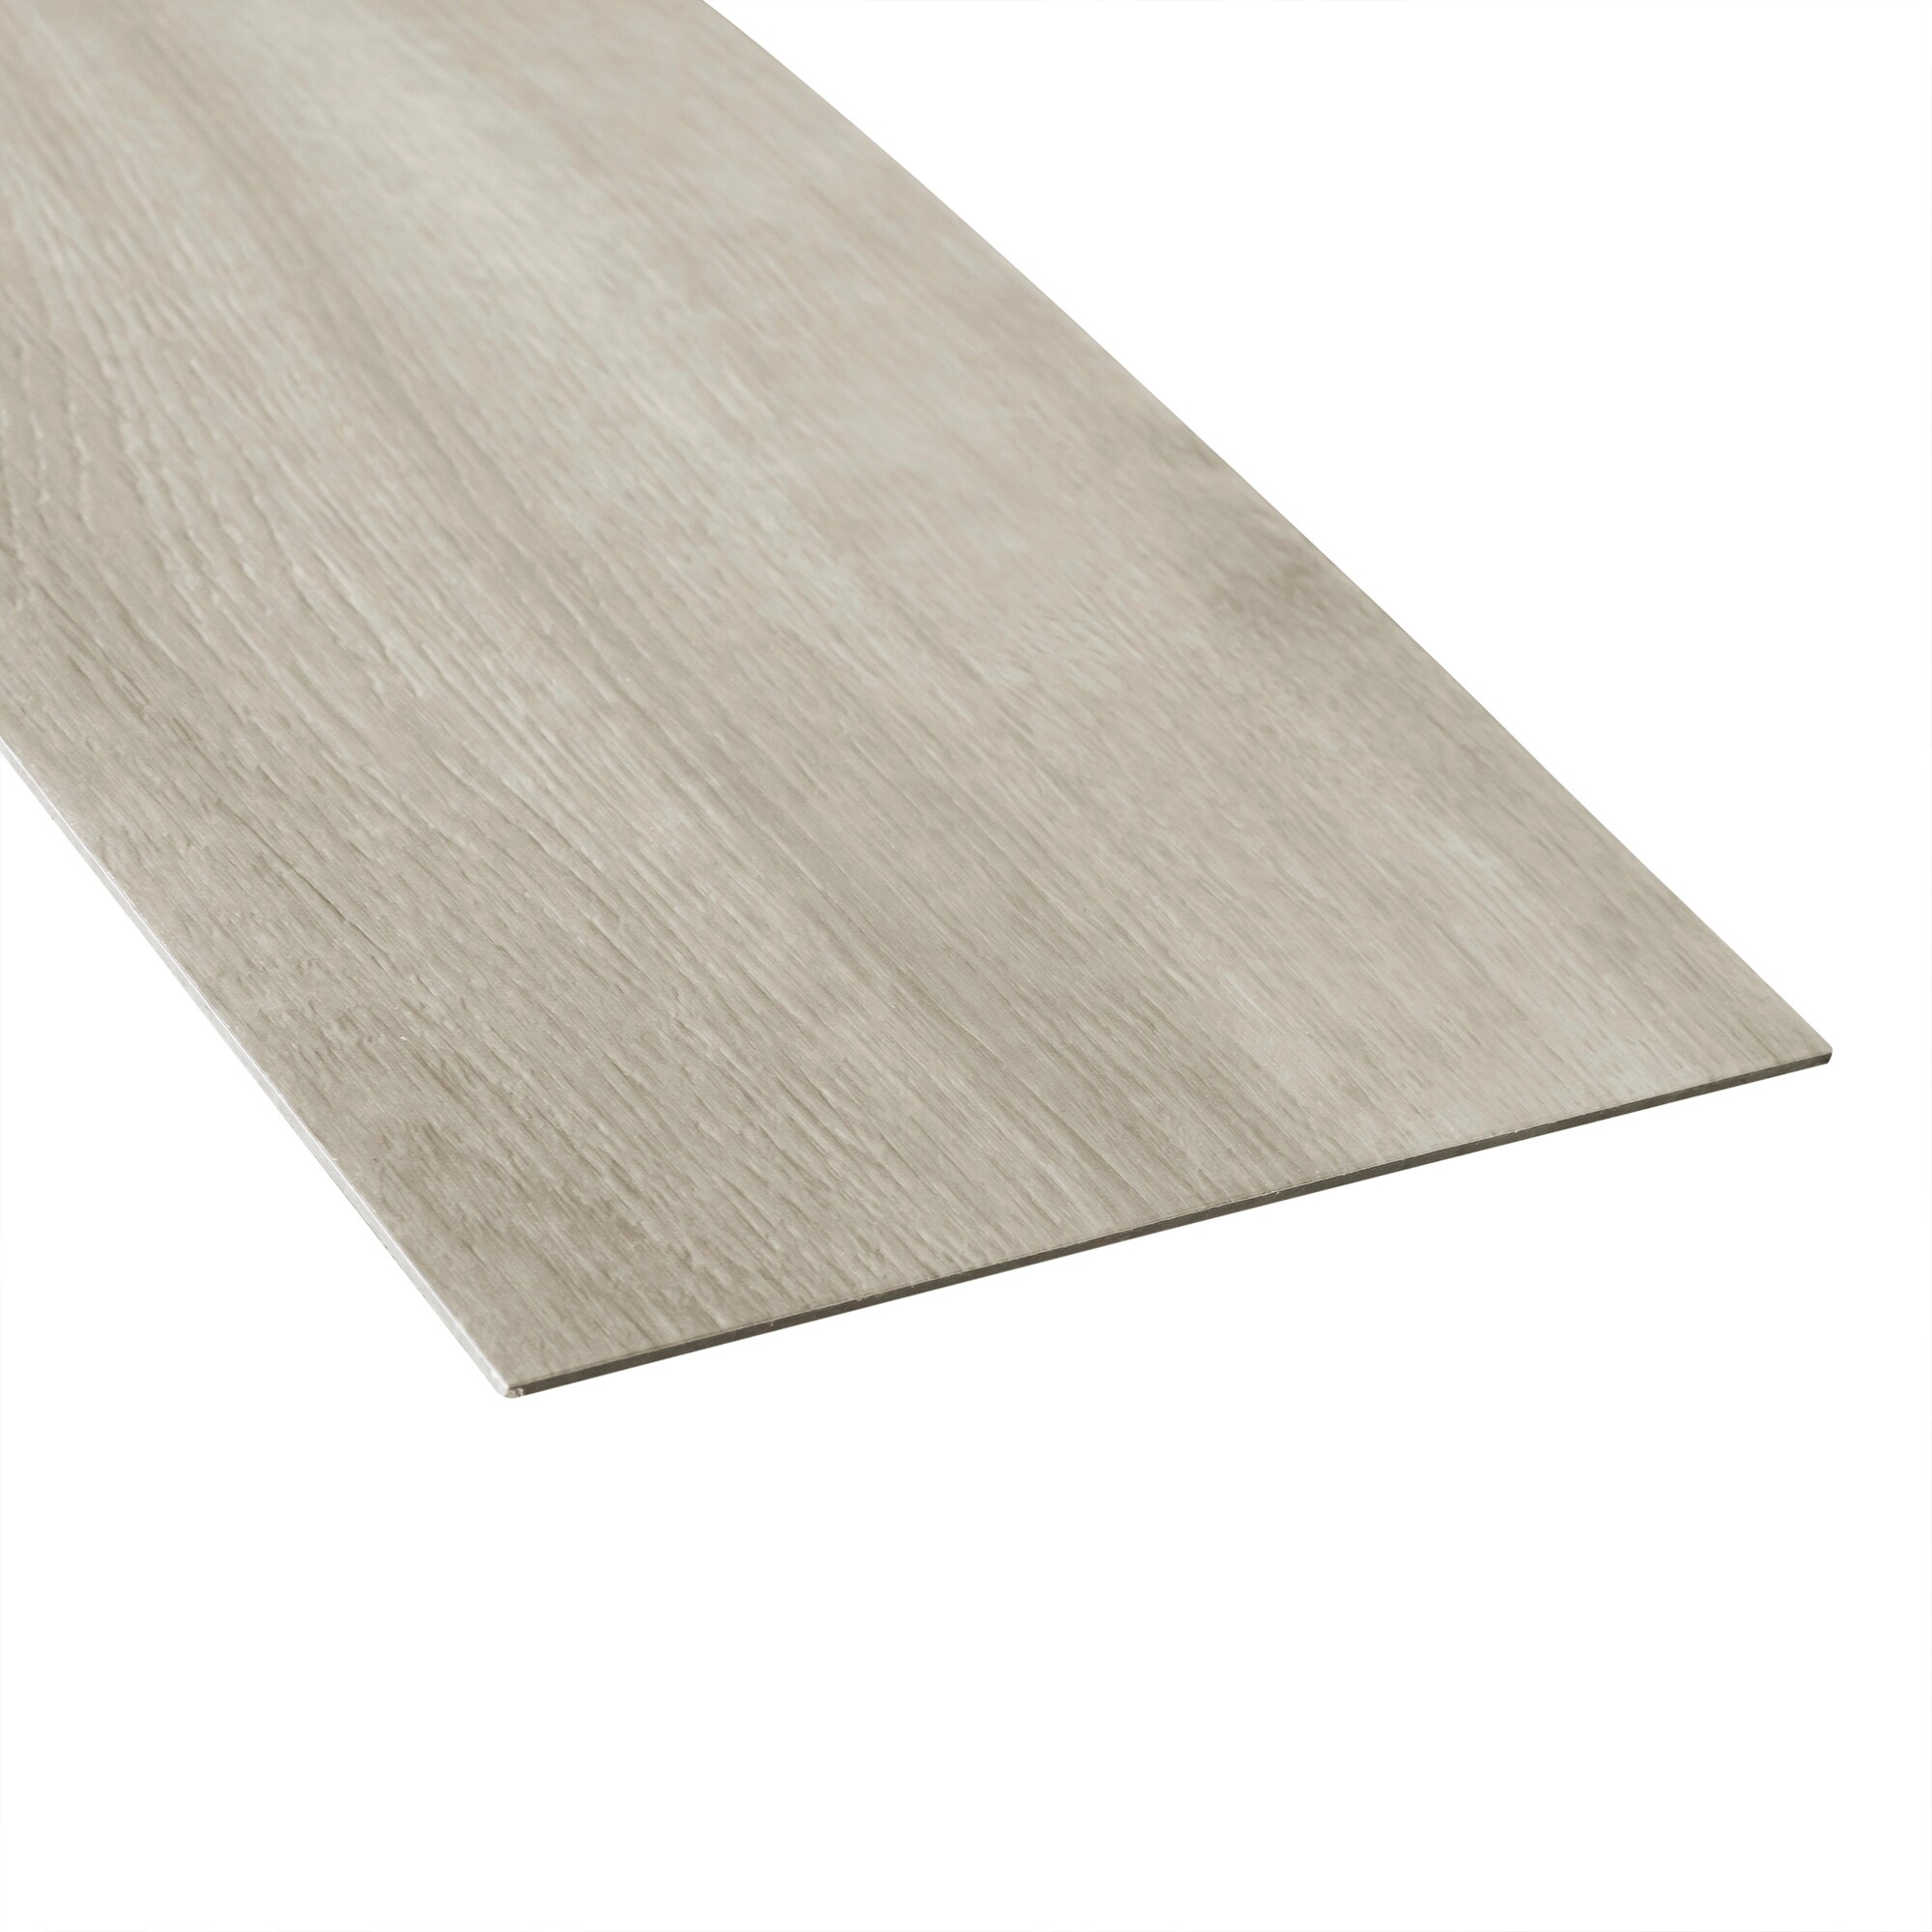 Mohawk Basics Waterproof Vinyl Plank Flooring in Light Pewter 25mm, 7.5 x 7  Sample SPC1319480